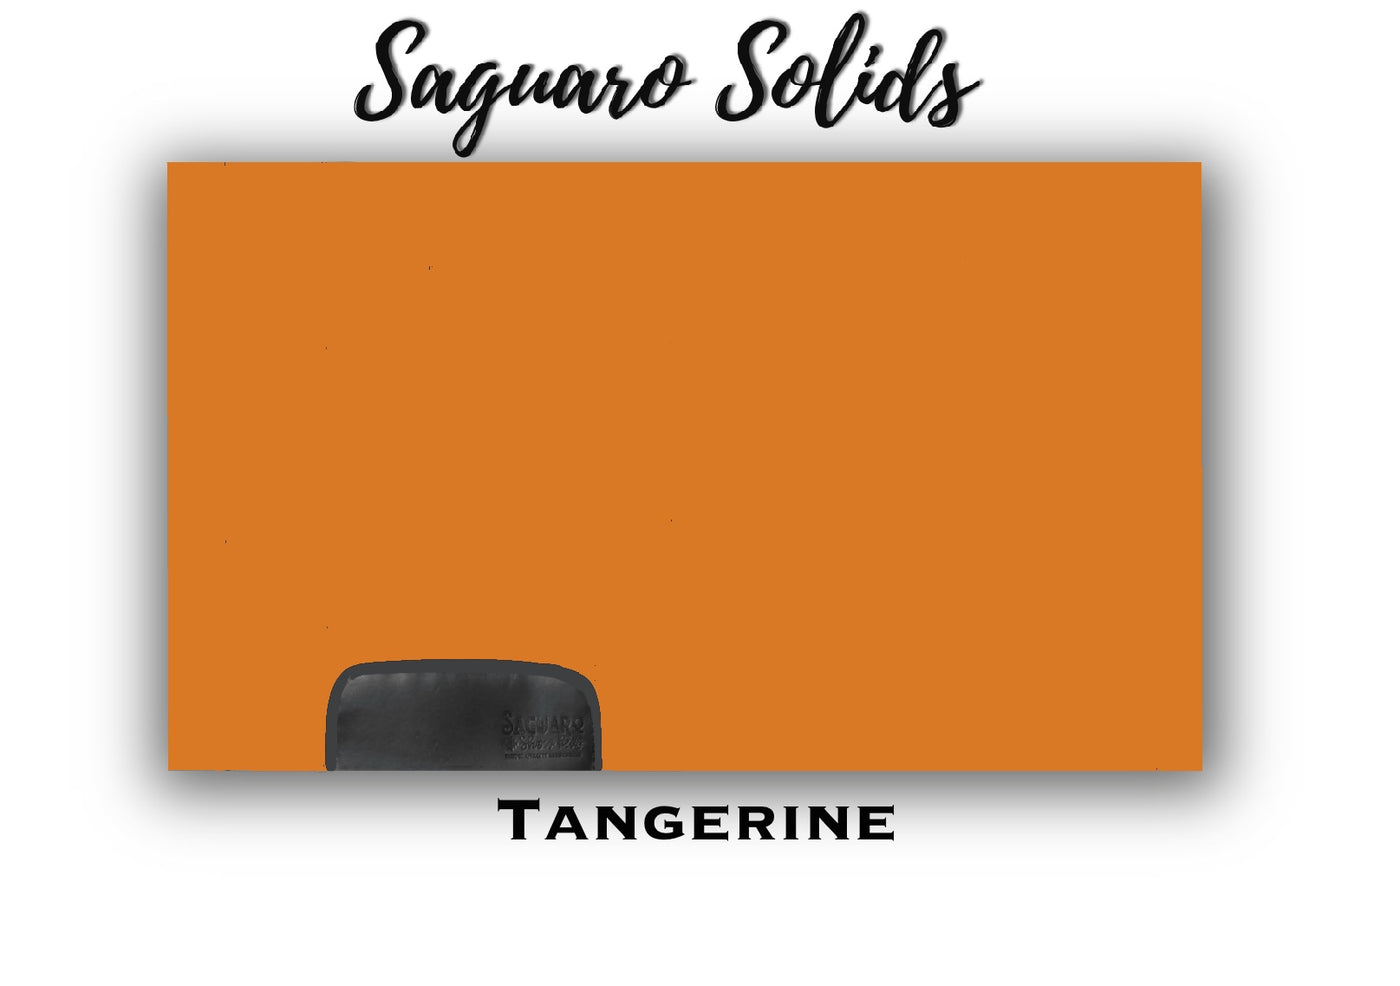 Saguaro Solid "Tangerine" Show Pad (SEMI-CUSTOM)